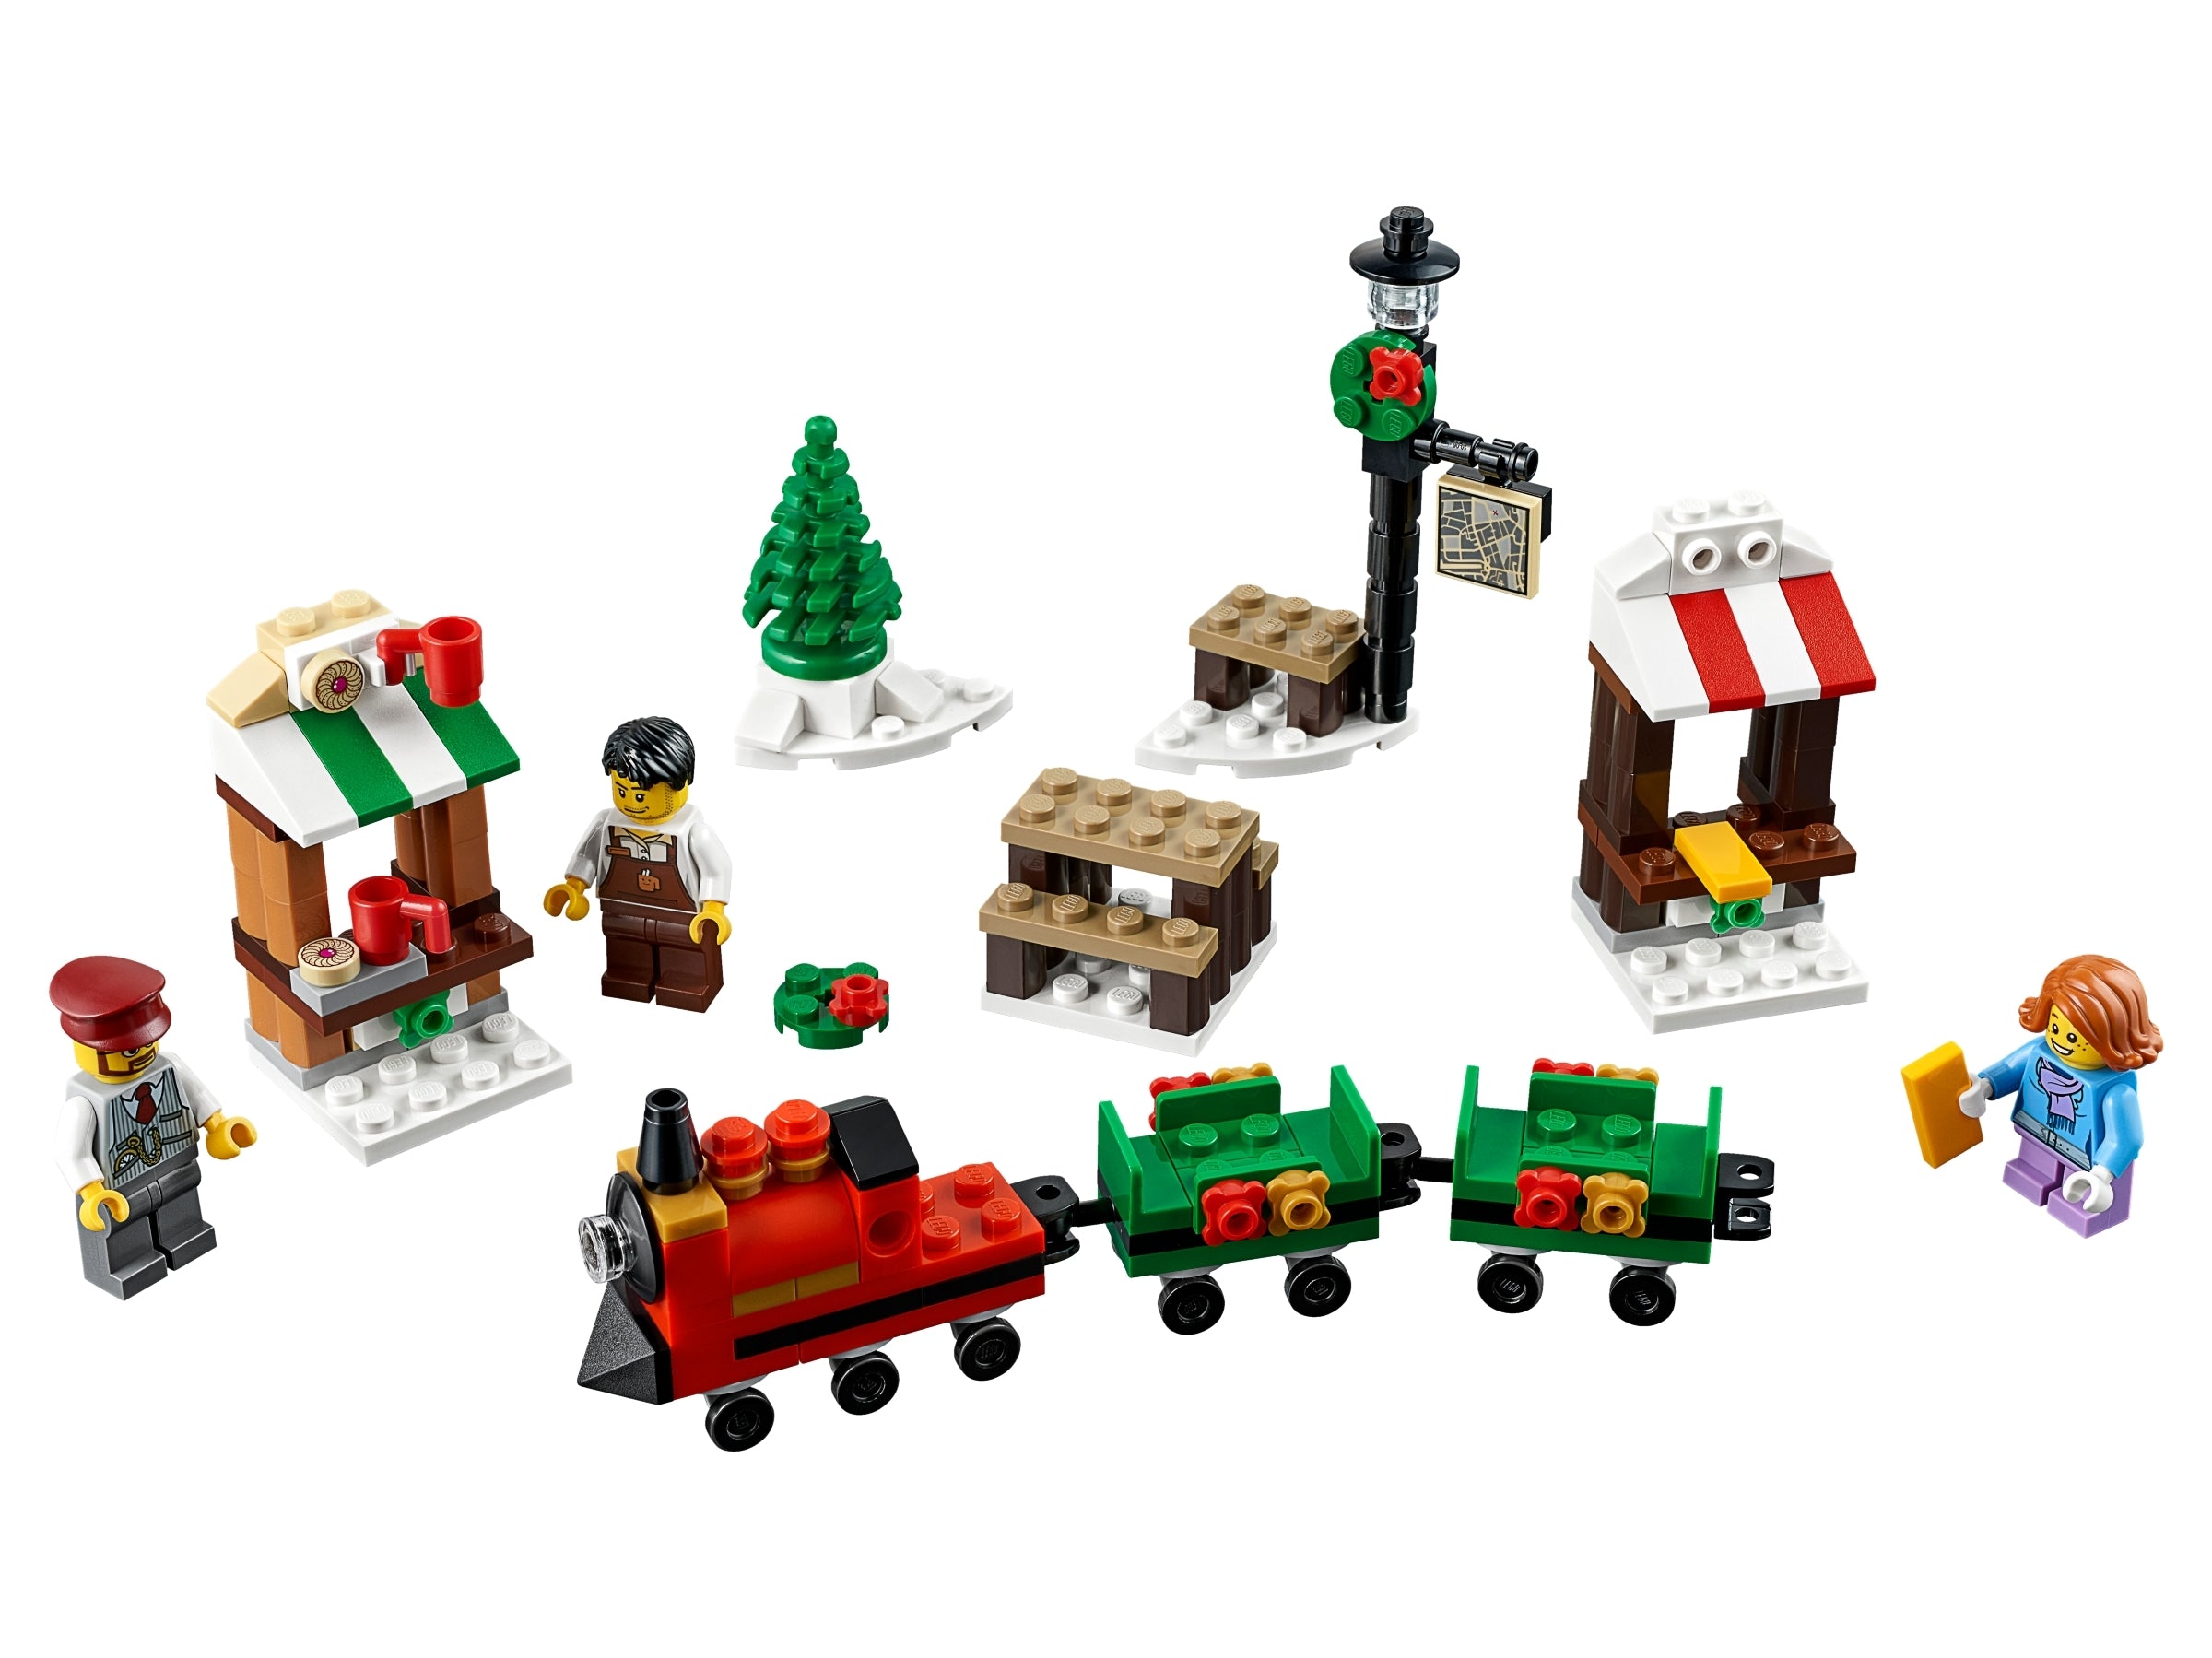 LEGO Christmas Train Ride 40262